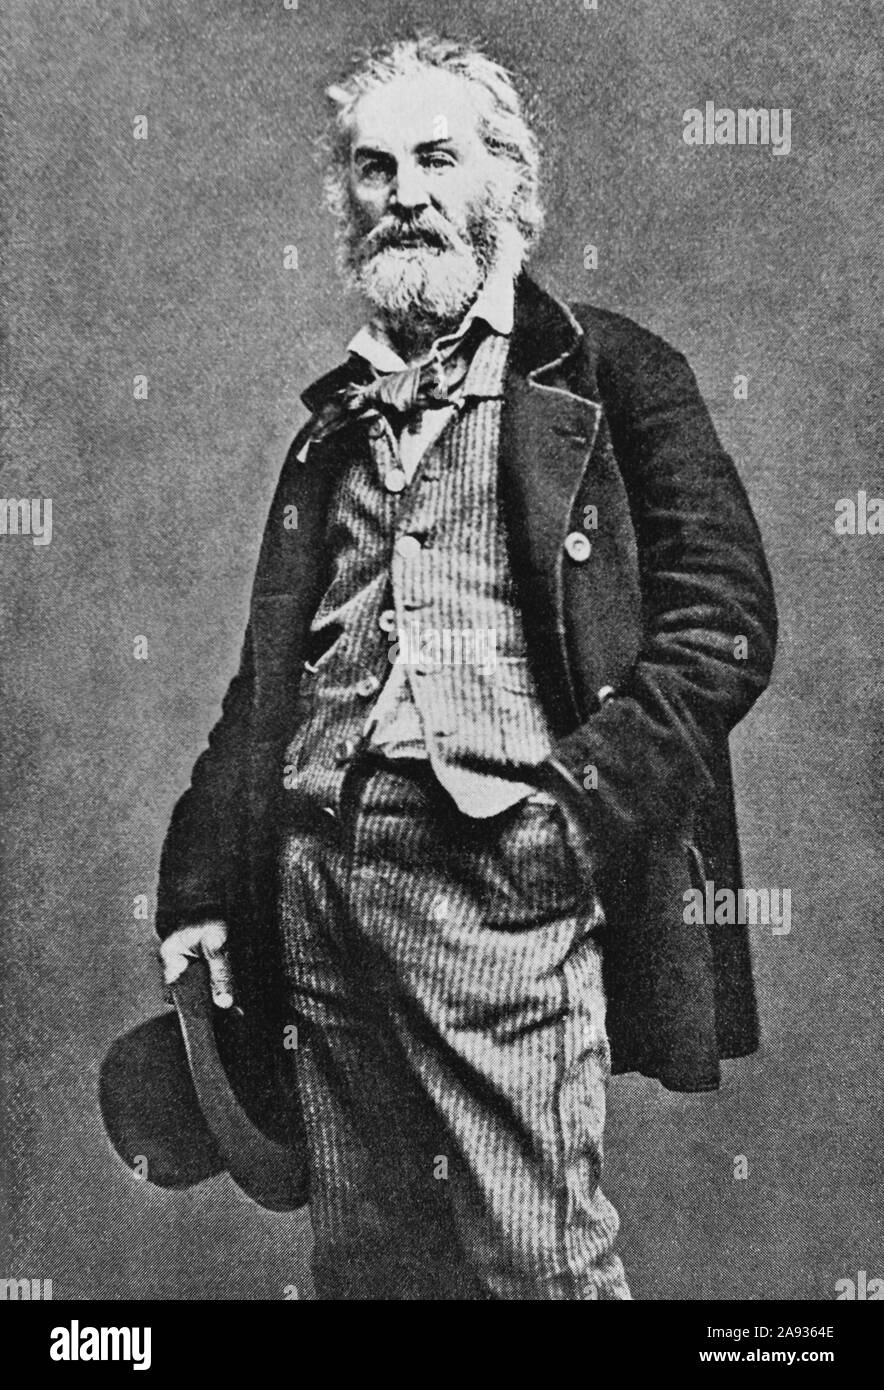 Vintage portrait photo of American poet, essayist and journalist Walt Whitman (1819 – 1892). Photo circa 1849. Stock Photo